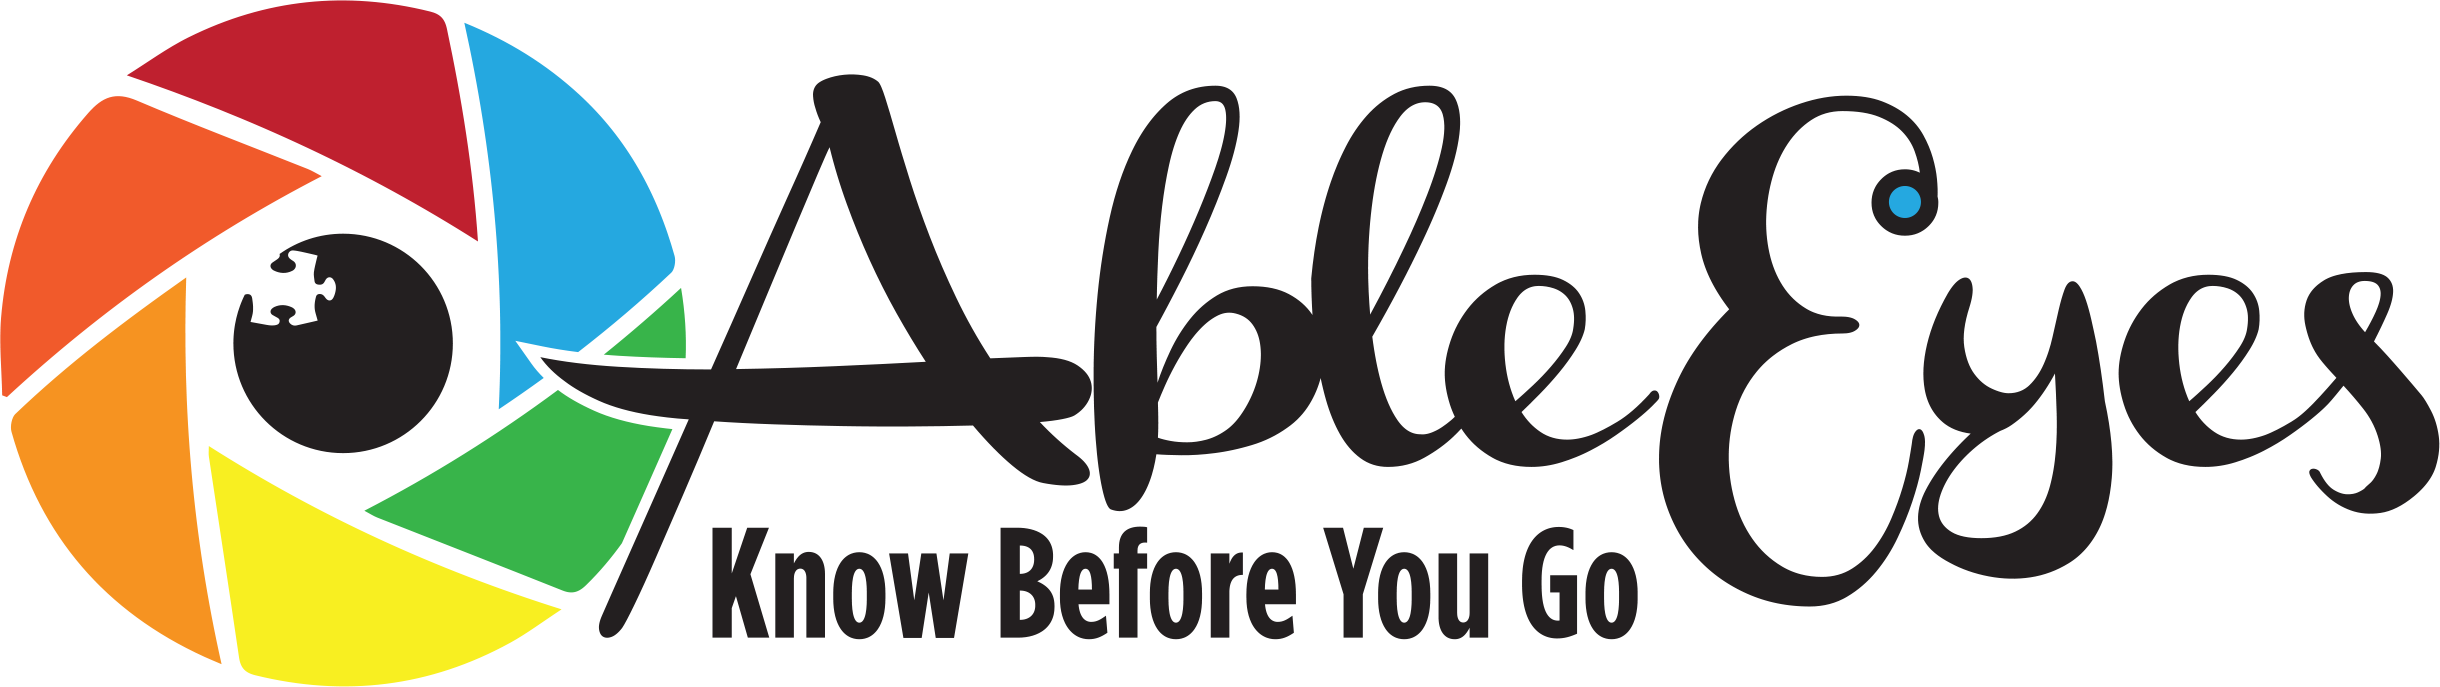 able eyes logo